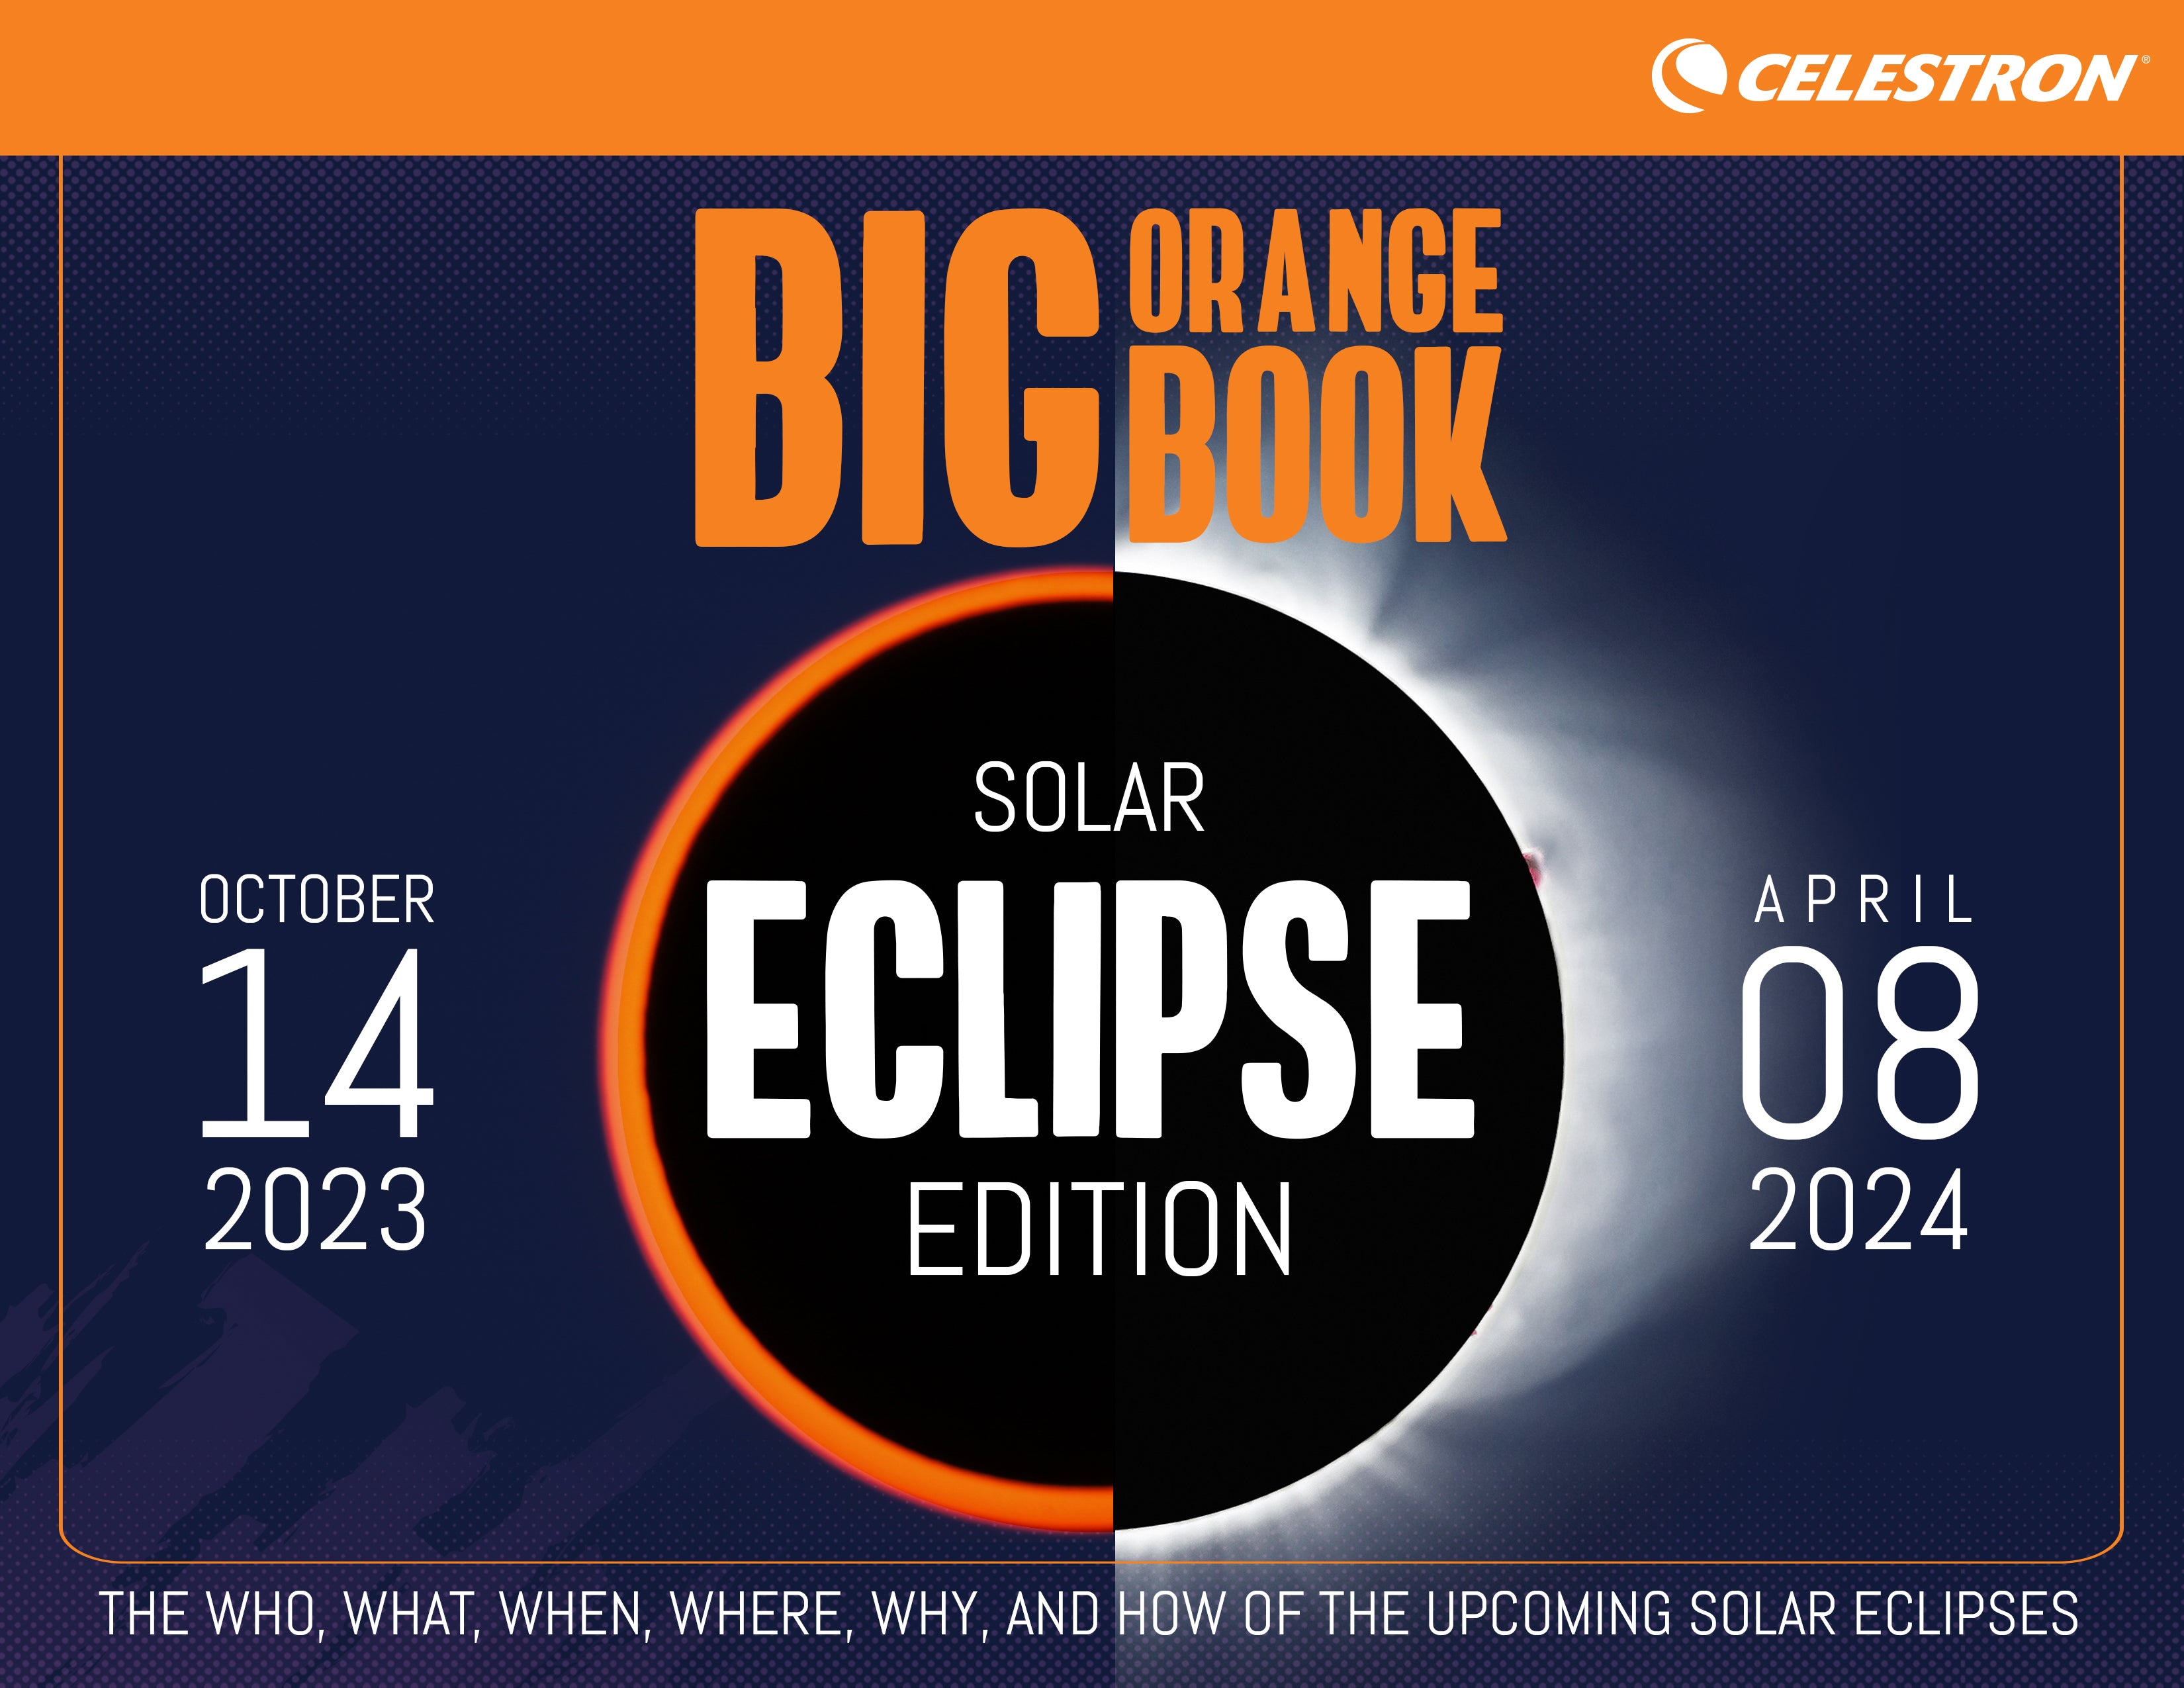 Big Orange Book - Eclipse Edition